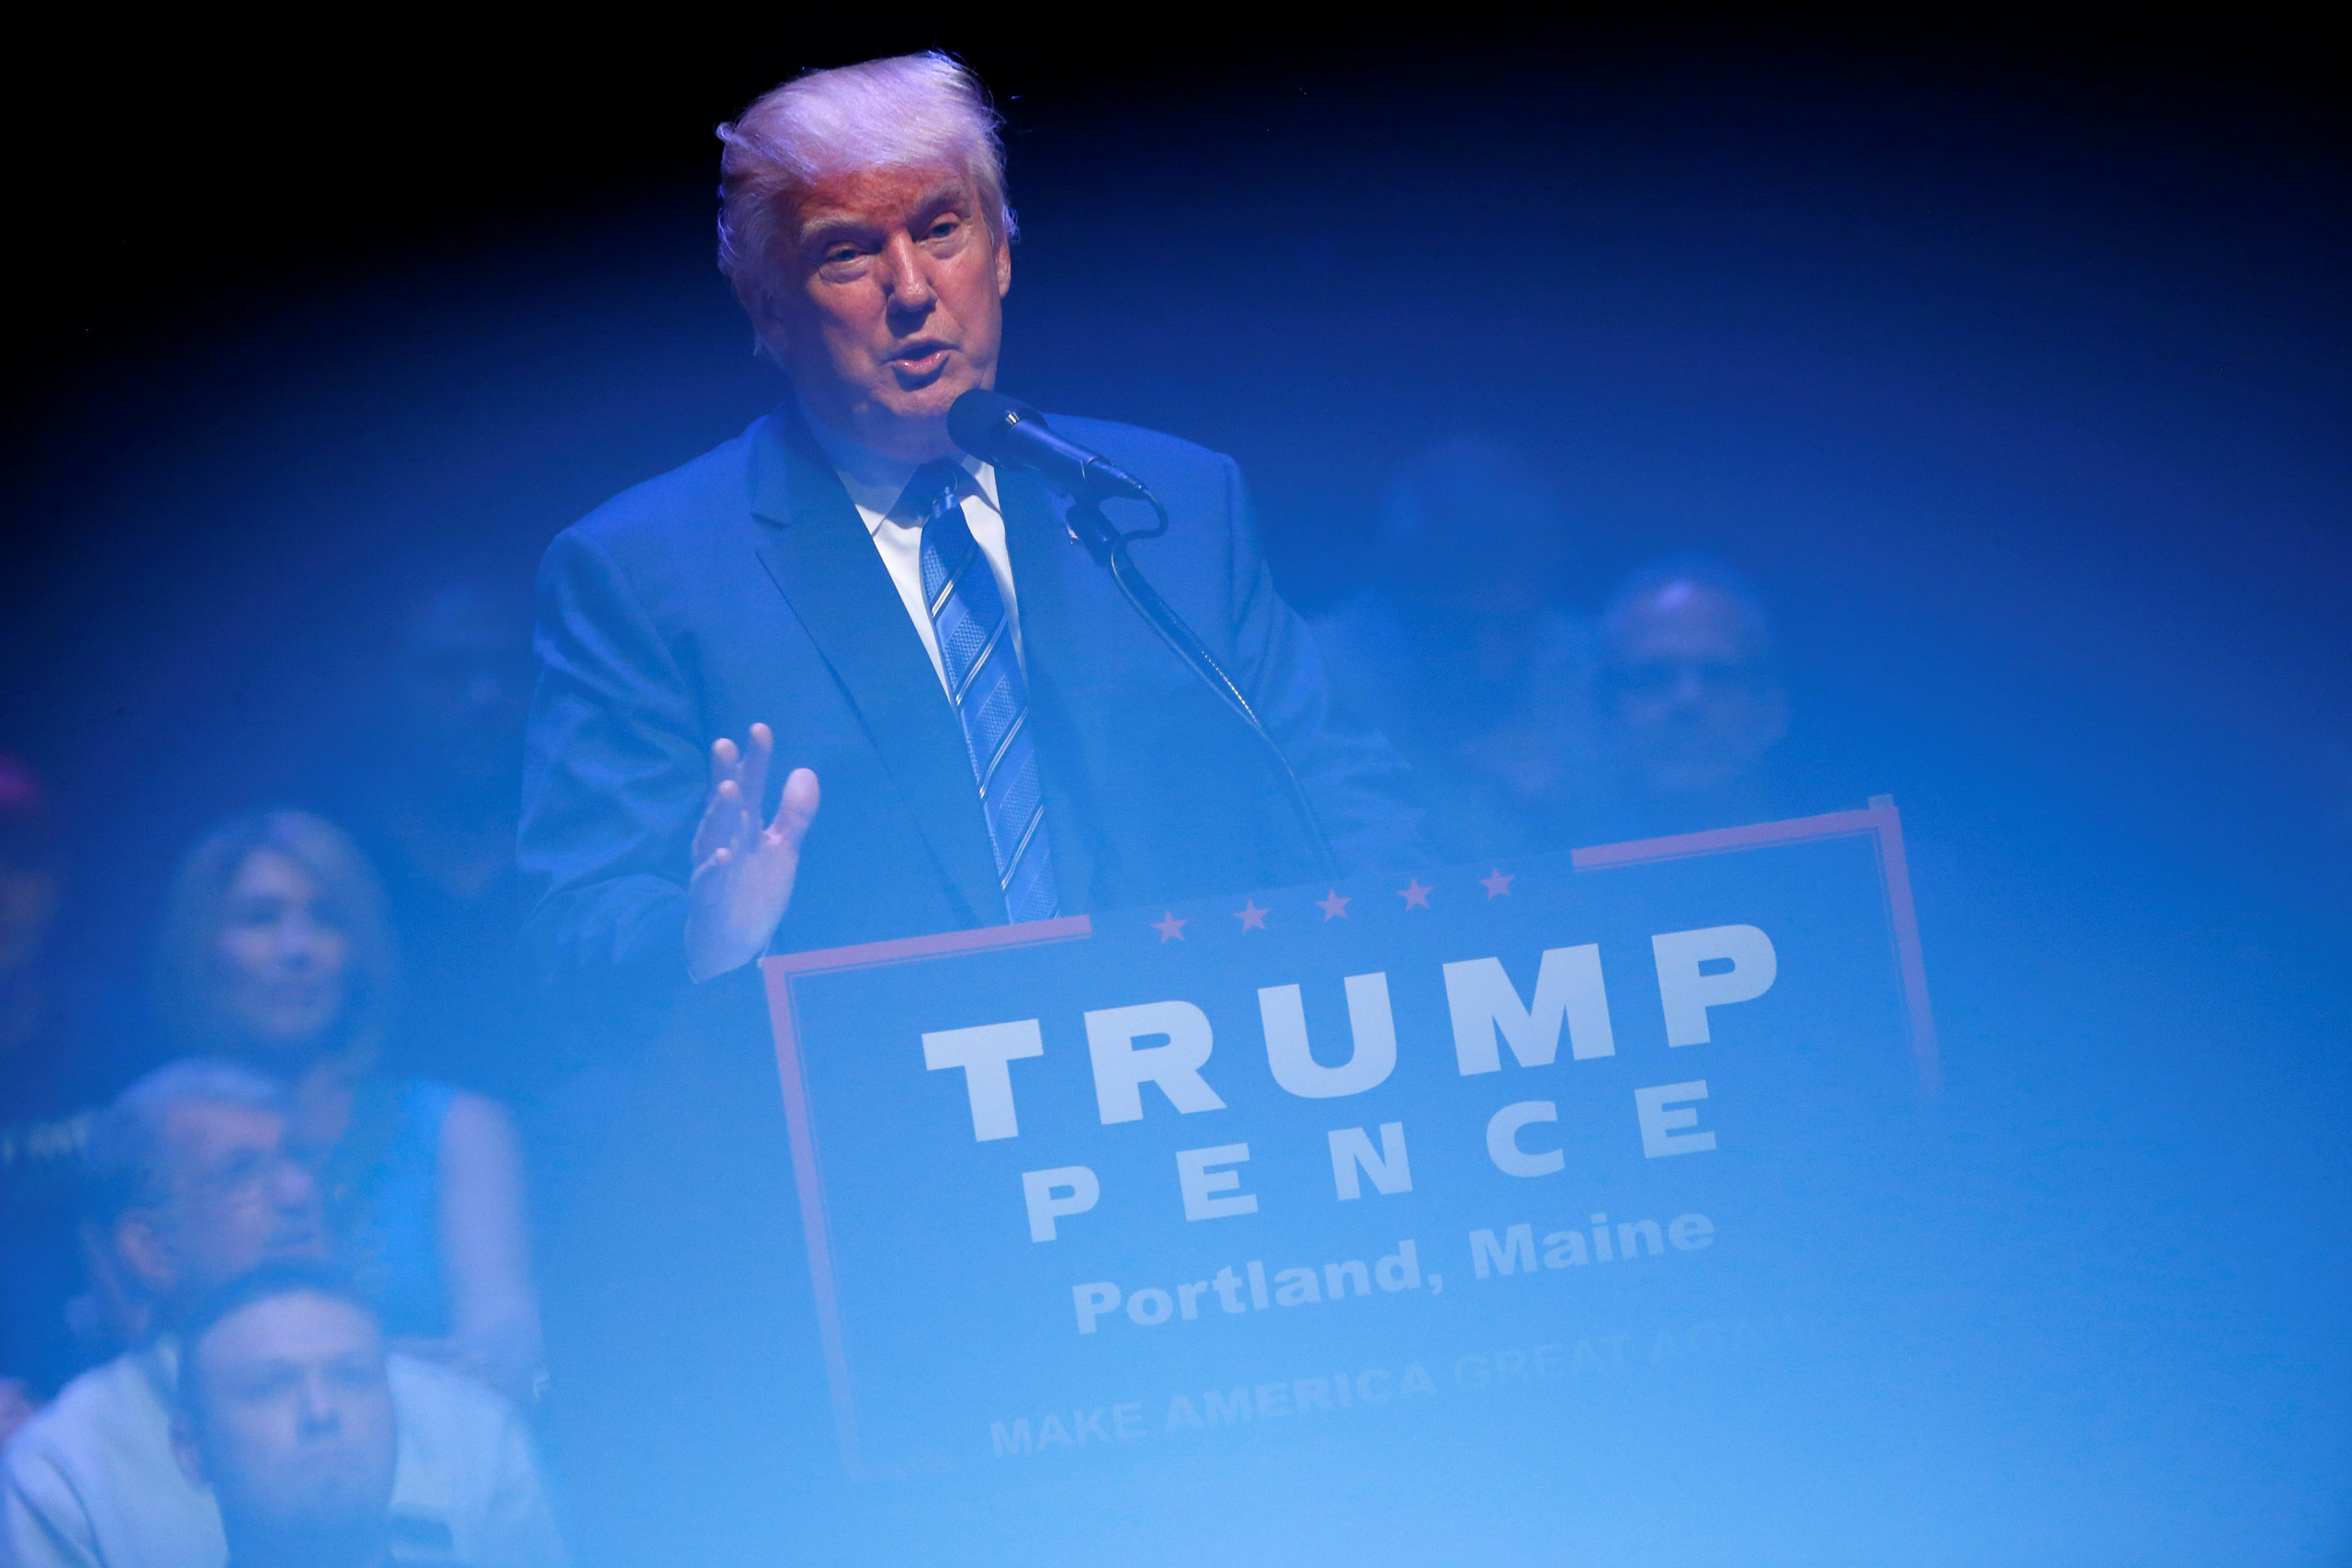 Republican U.S. presidential nominee Donald Trump attends a campaign event at the Merrill Auditorium in Portland, Maine